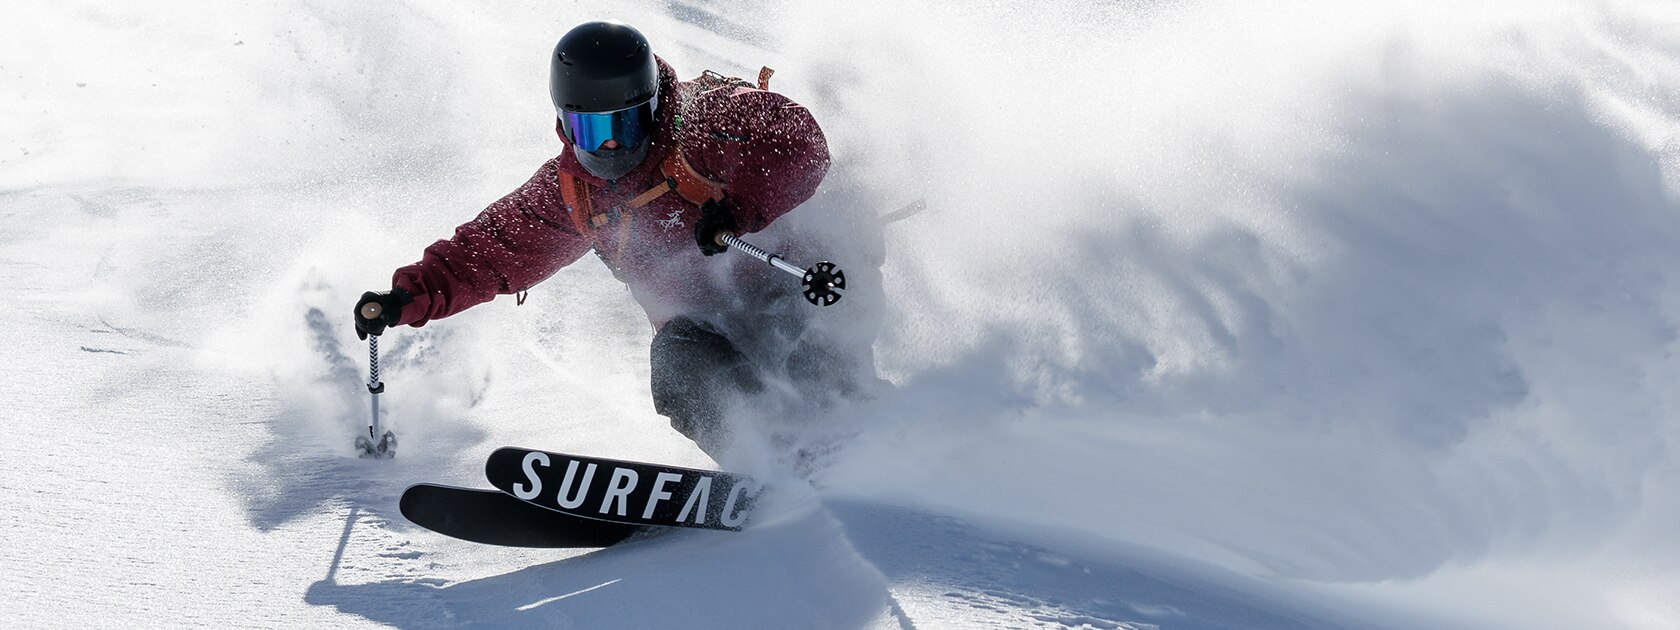 image of a skier wearing zeal ski goggles turning sharply in powder